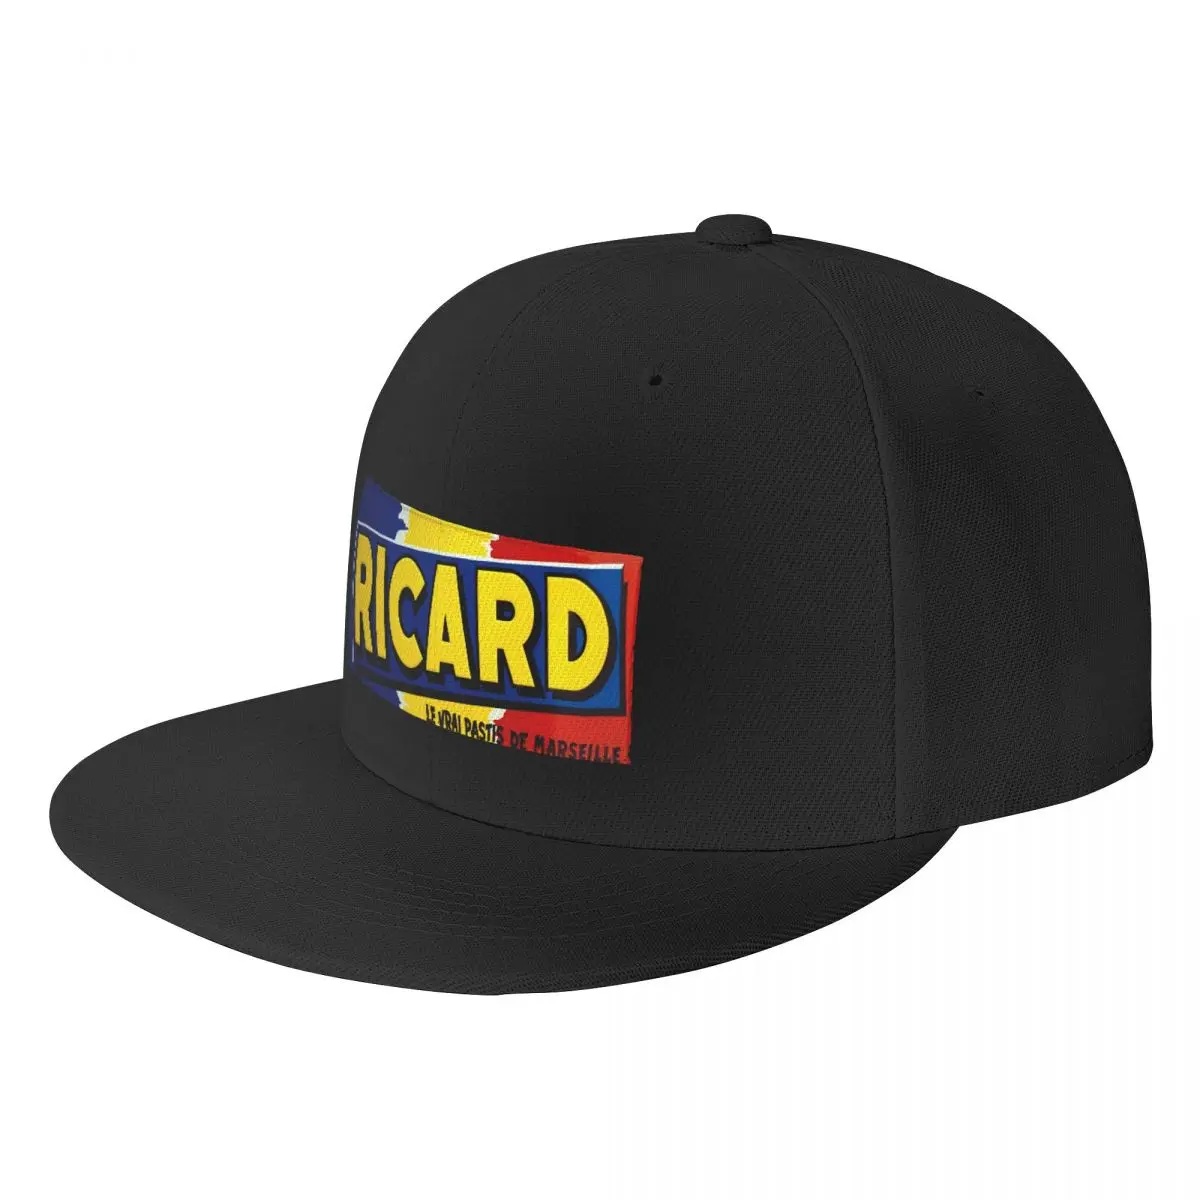 

Ricard Logo Snapback Hats Flat Bill Brim Backpack Hats Funny Running Hat Trucker Gym Parties Caps